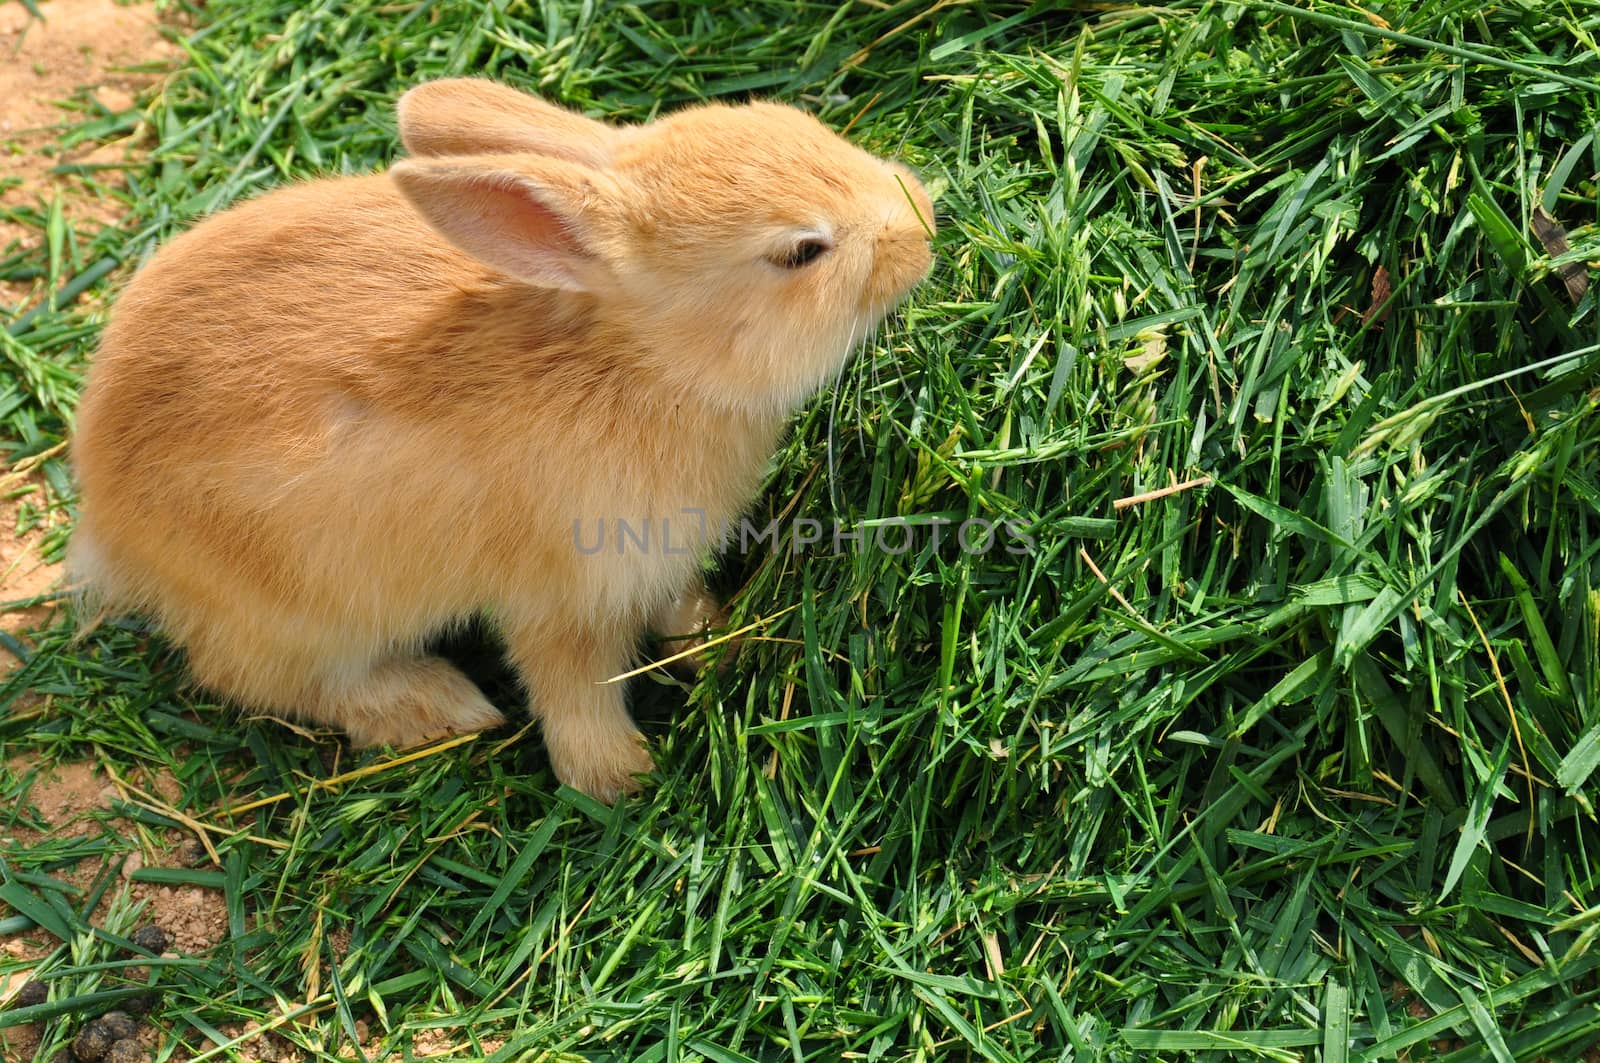 Bunny rabbit feeding on grass. Cute baby animal background.